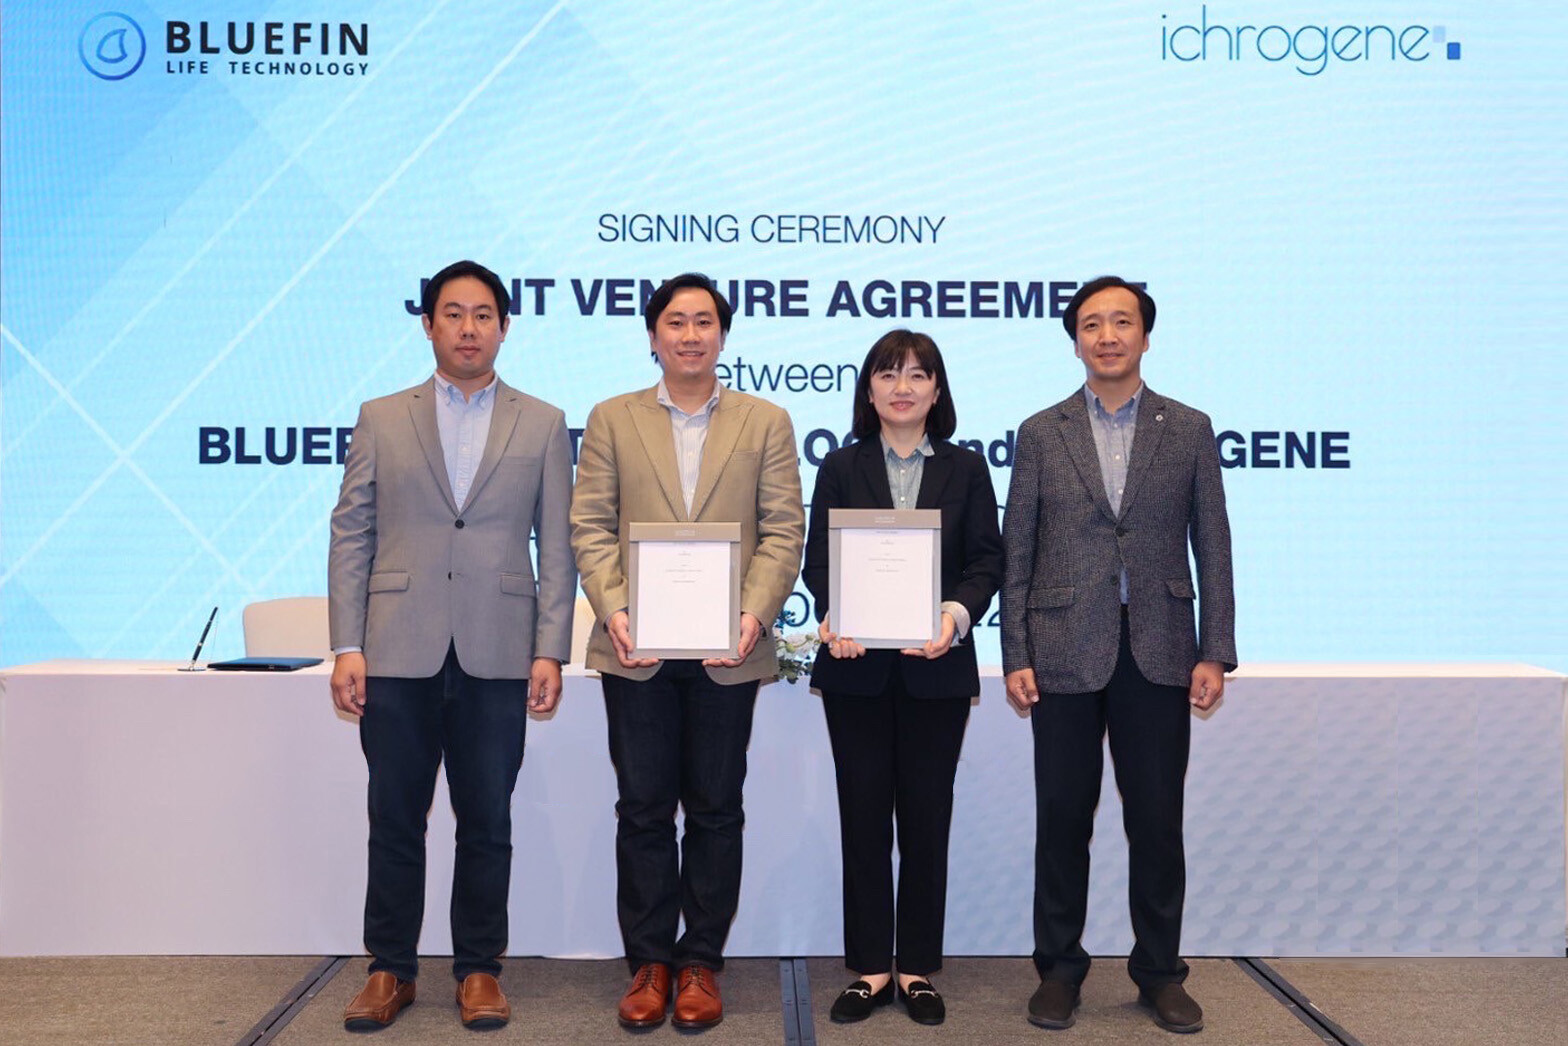 Bluefin Life Technology ลงนามร่วมทุนกับ Ichrogene จากเกาหลีใต้ เพื่อพัฒนาการแพทย์แห่งอนาคต 'ดิจิทัล เฮลธ์'